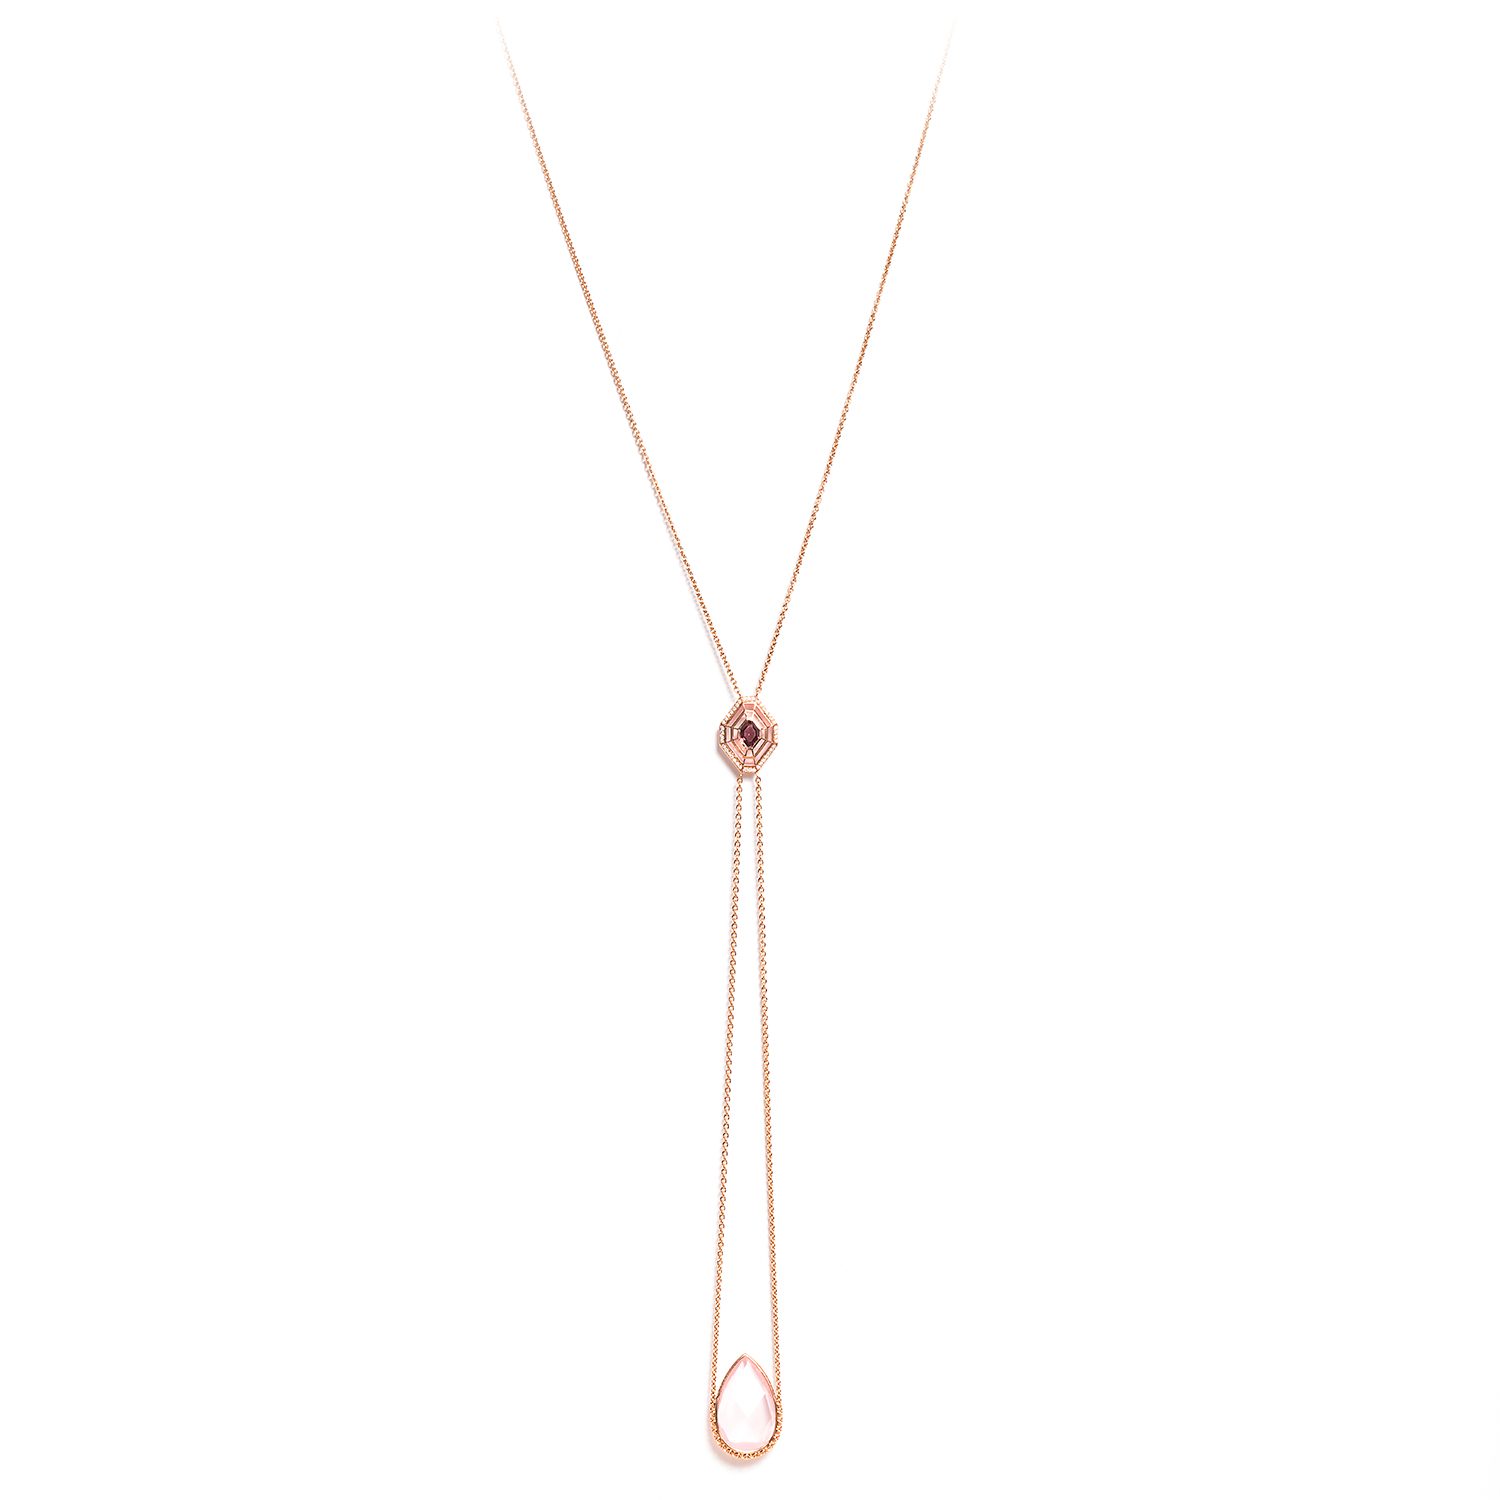 benedicte-de-boysson-marquise-hanging-pear-sautoir-necklace-collection